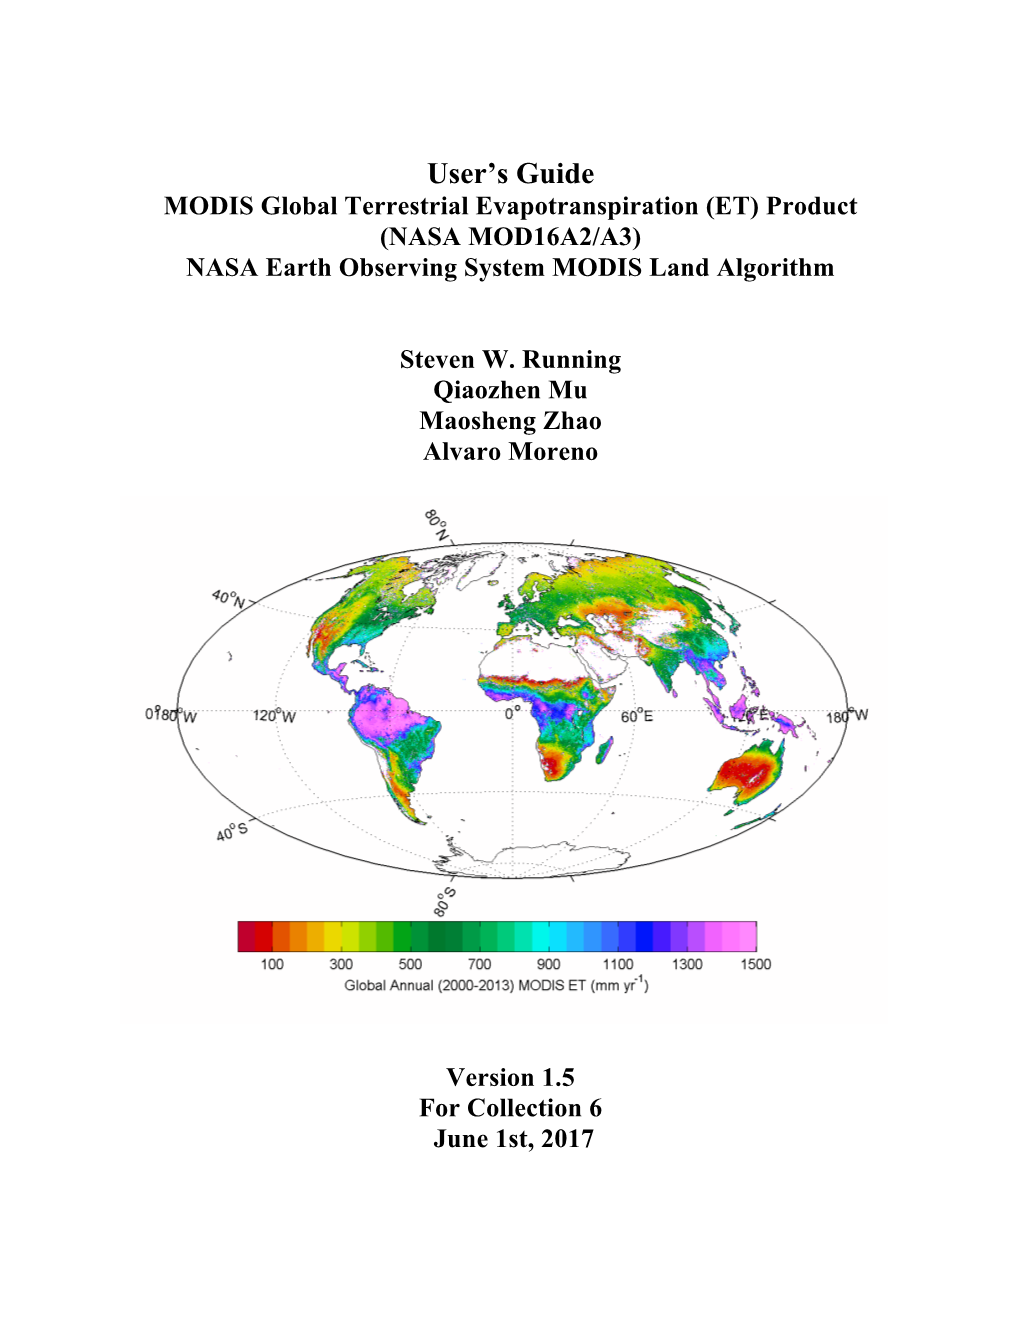 User's Guide MODIS Global Terrestrial Evapotranspiration (ET)